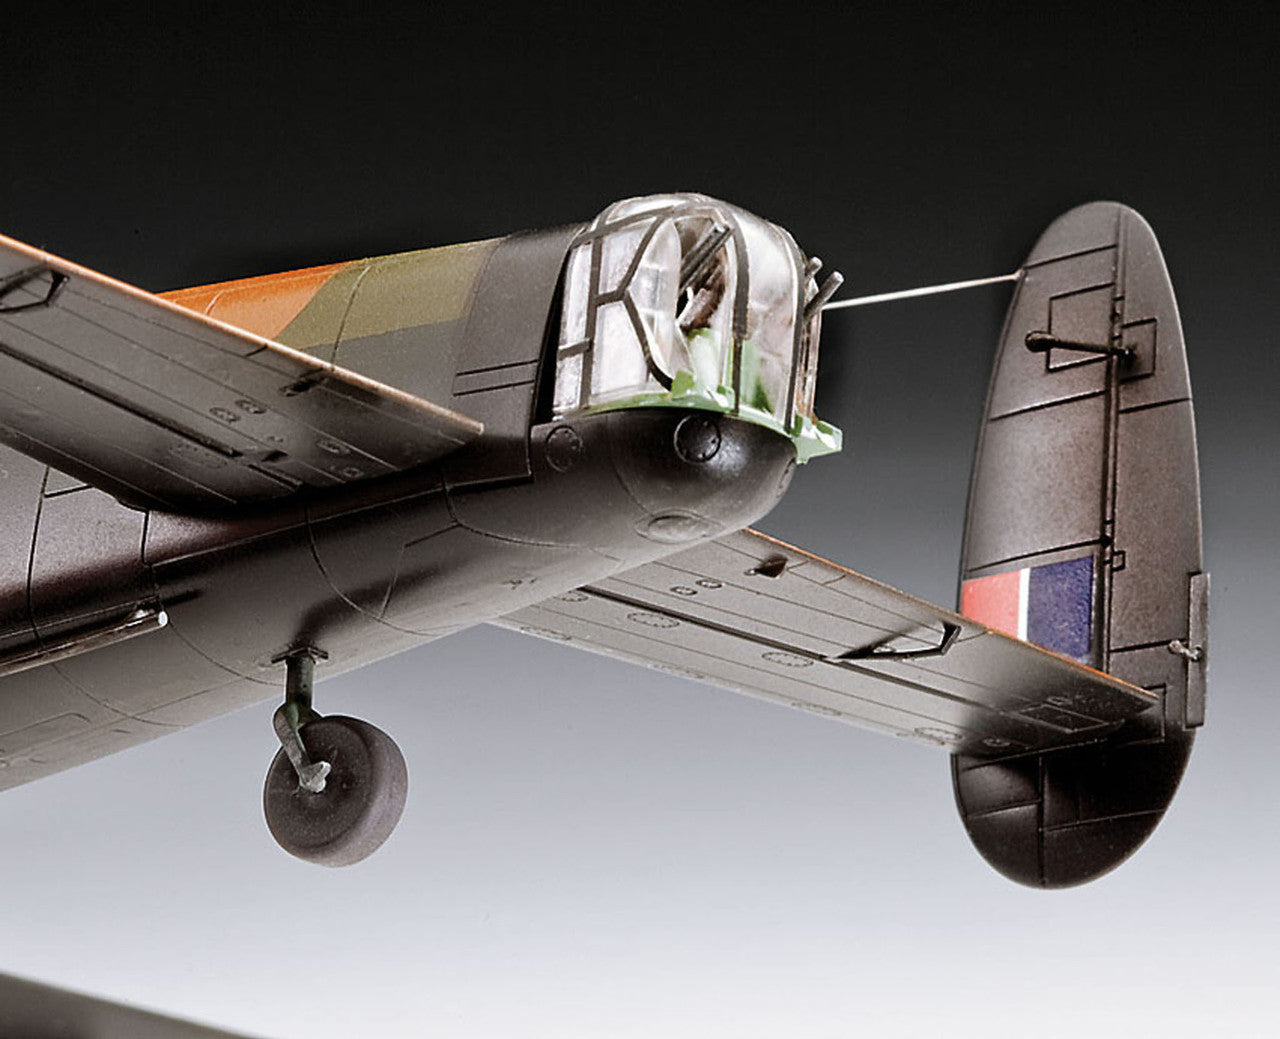 Avro Lancaster "Dambusters" (1:72) - Loaded Dice